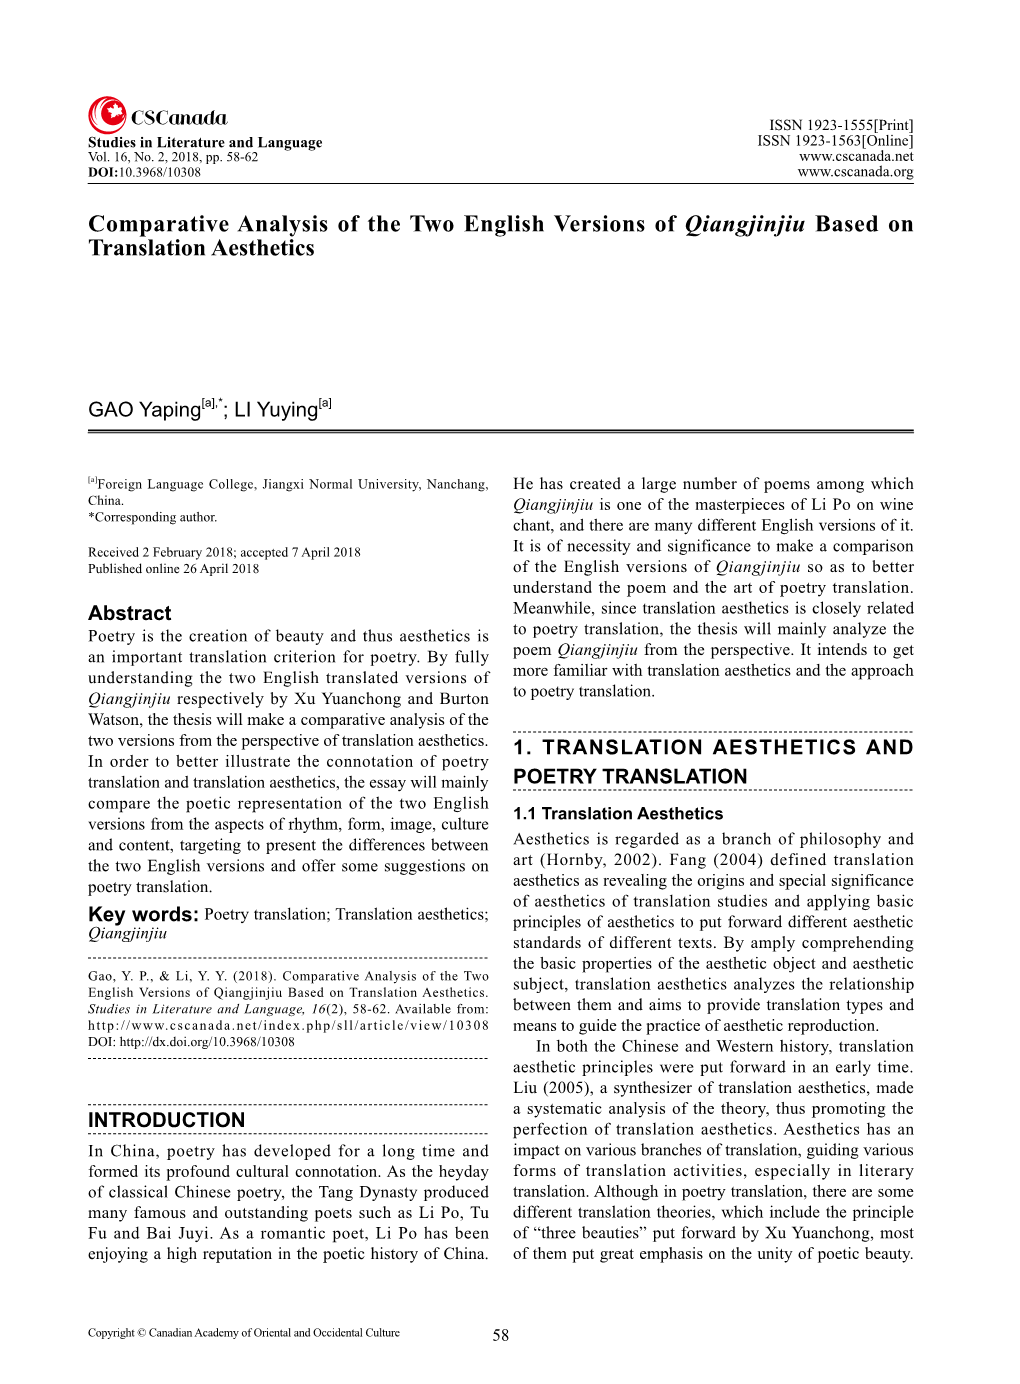 Comparative Analysis of the Two English Versions of Qiangjinjiu Based on Translation Aesthetics